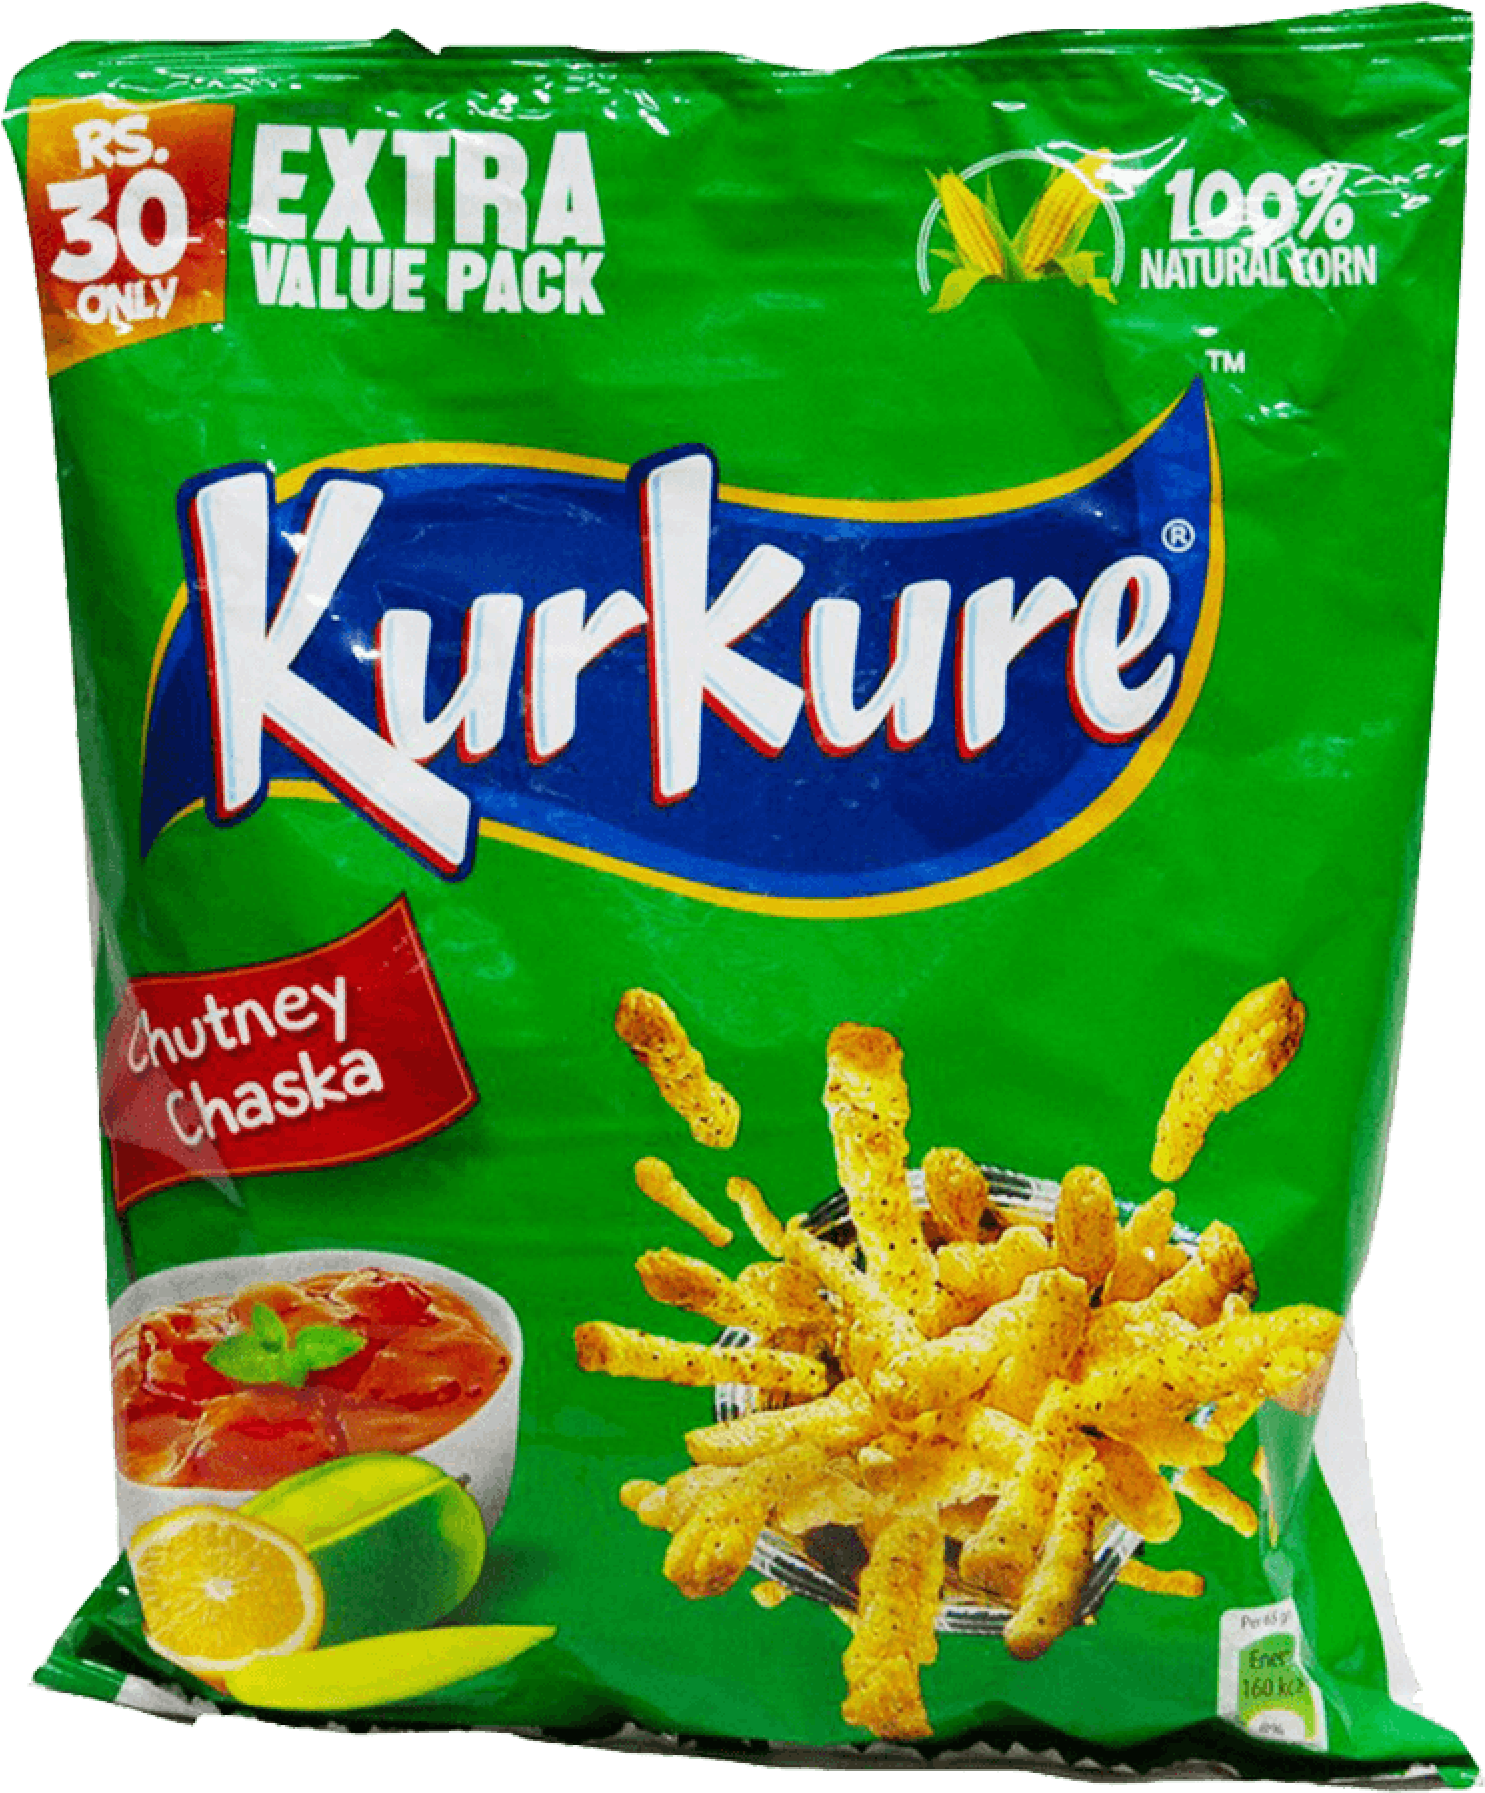 Kurkure Chutney Chaska Extra Value Pack PNG